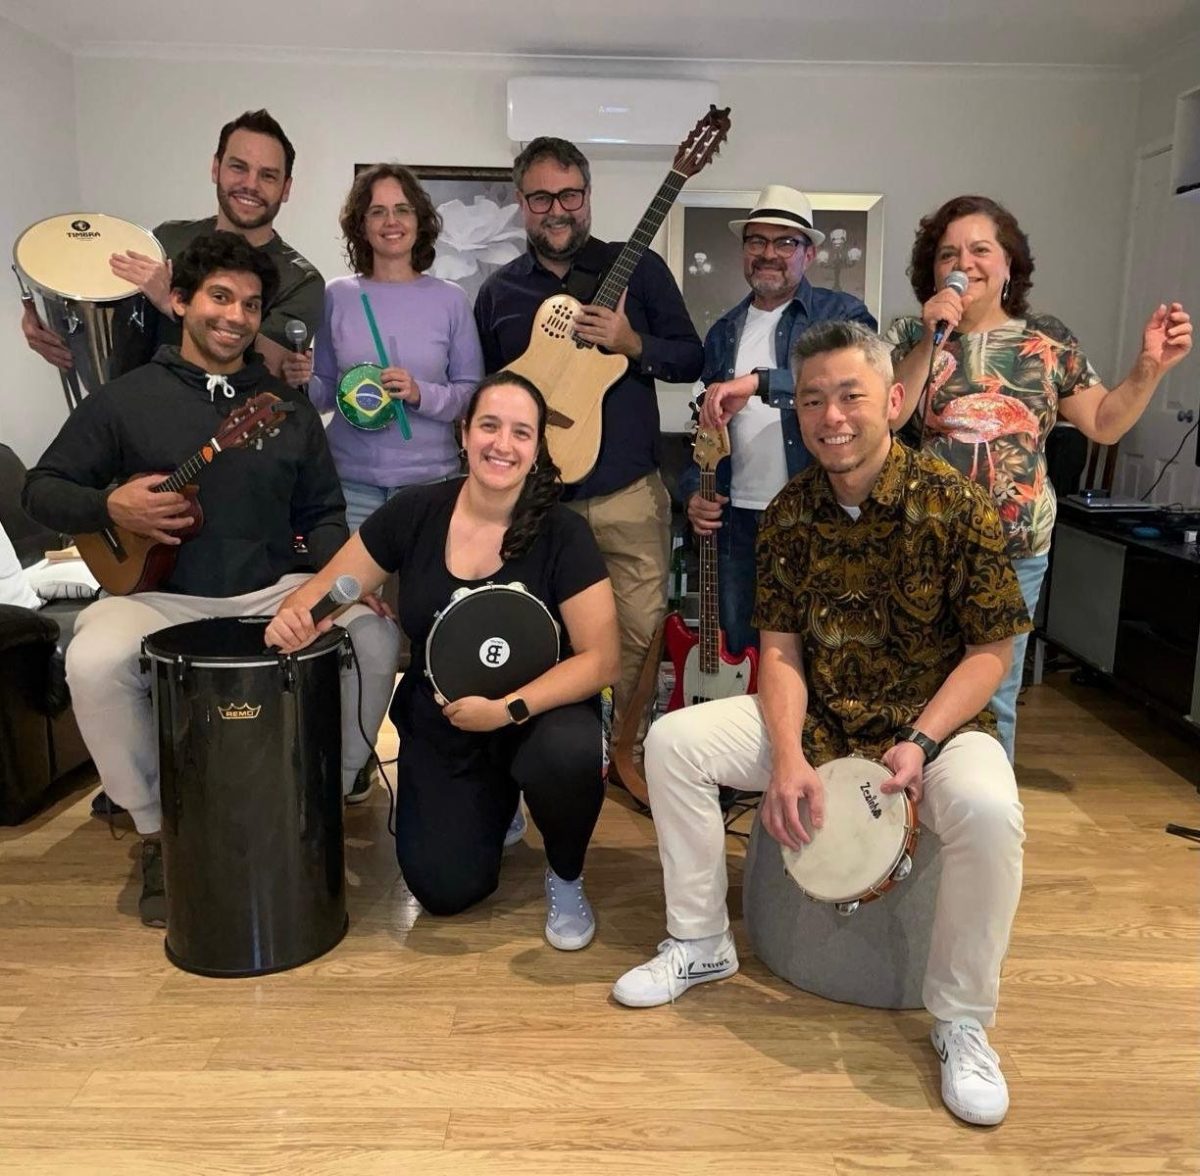 Capital Samba ensemble gathered with instruments